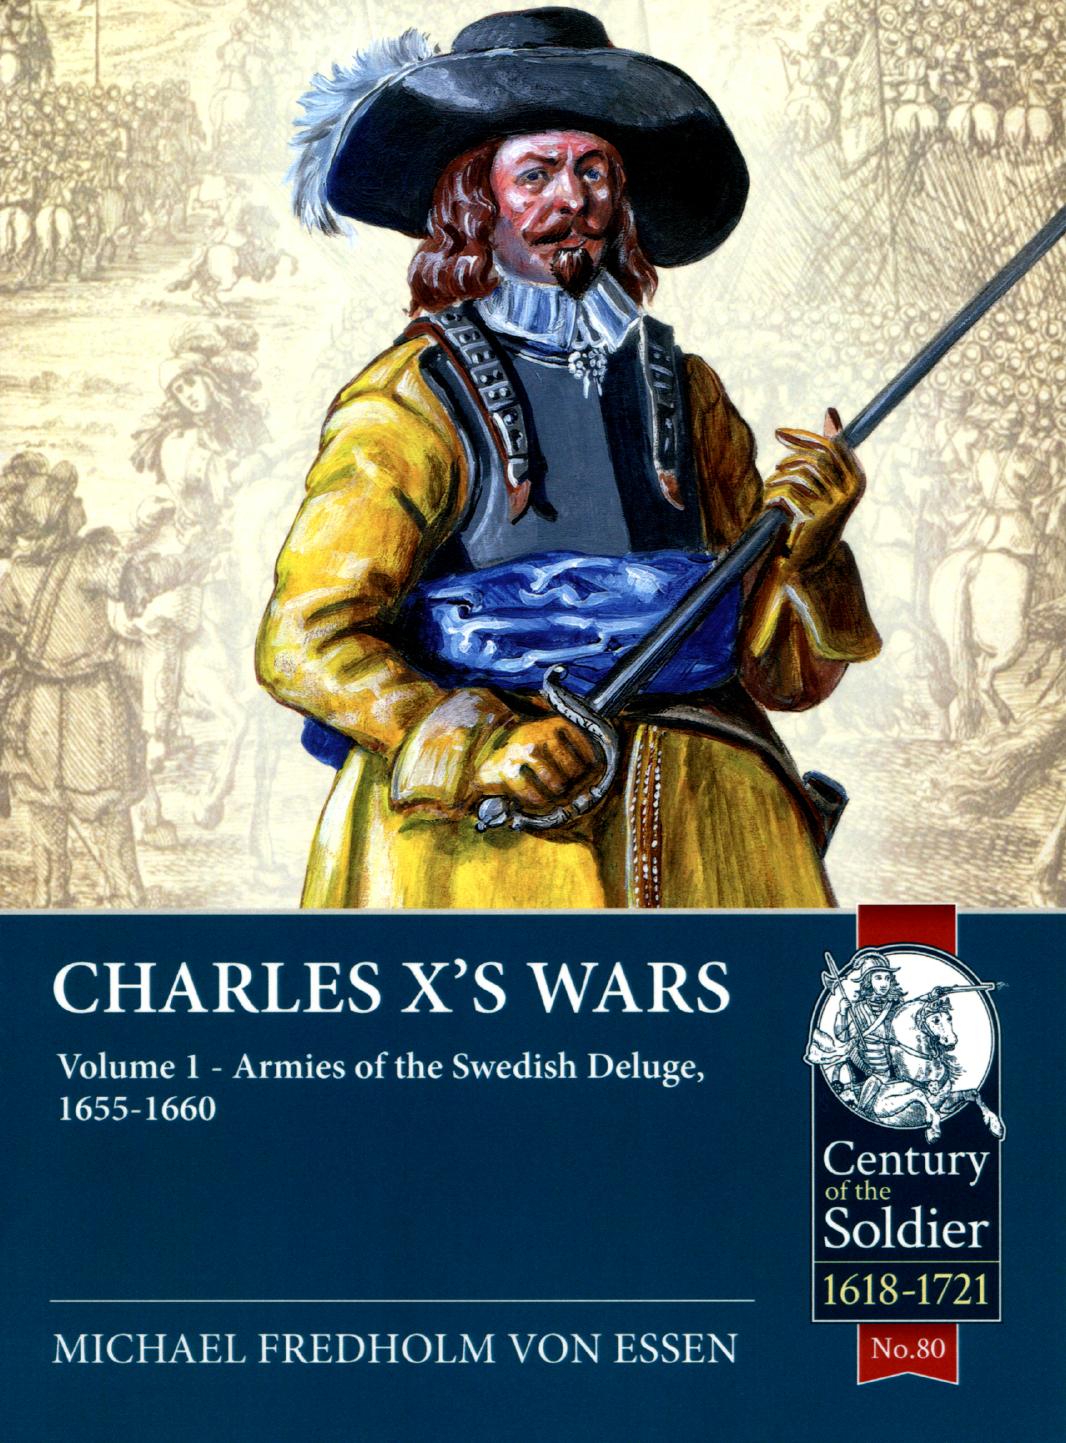 Charles X's Wars (1) Armies of the Swedish Deluge, 1655-1660 by Michael Fredholm von Essen